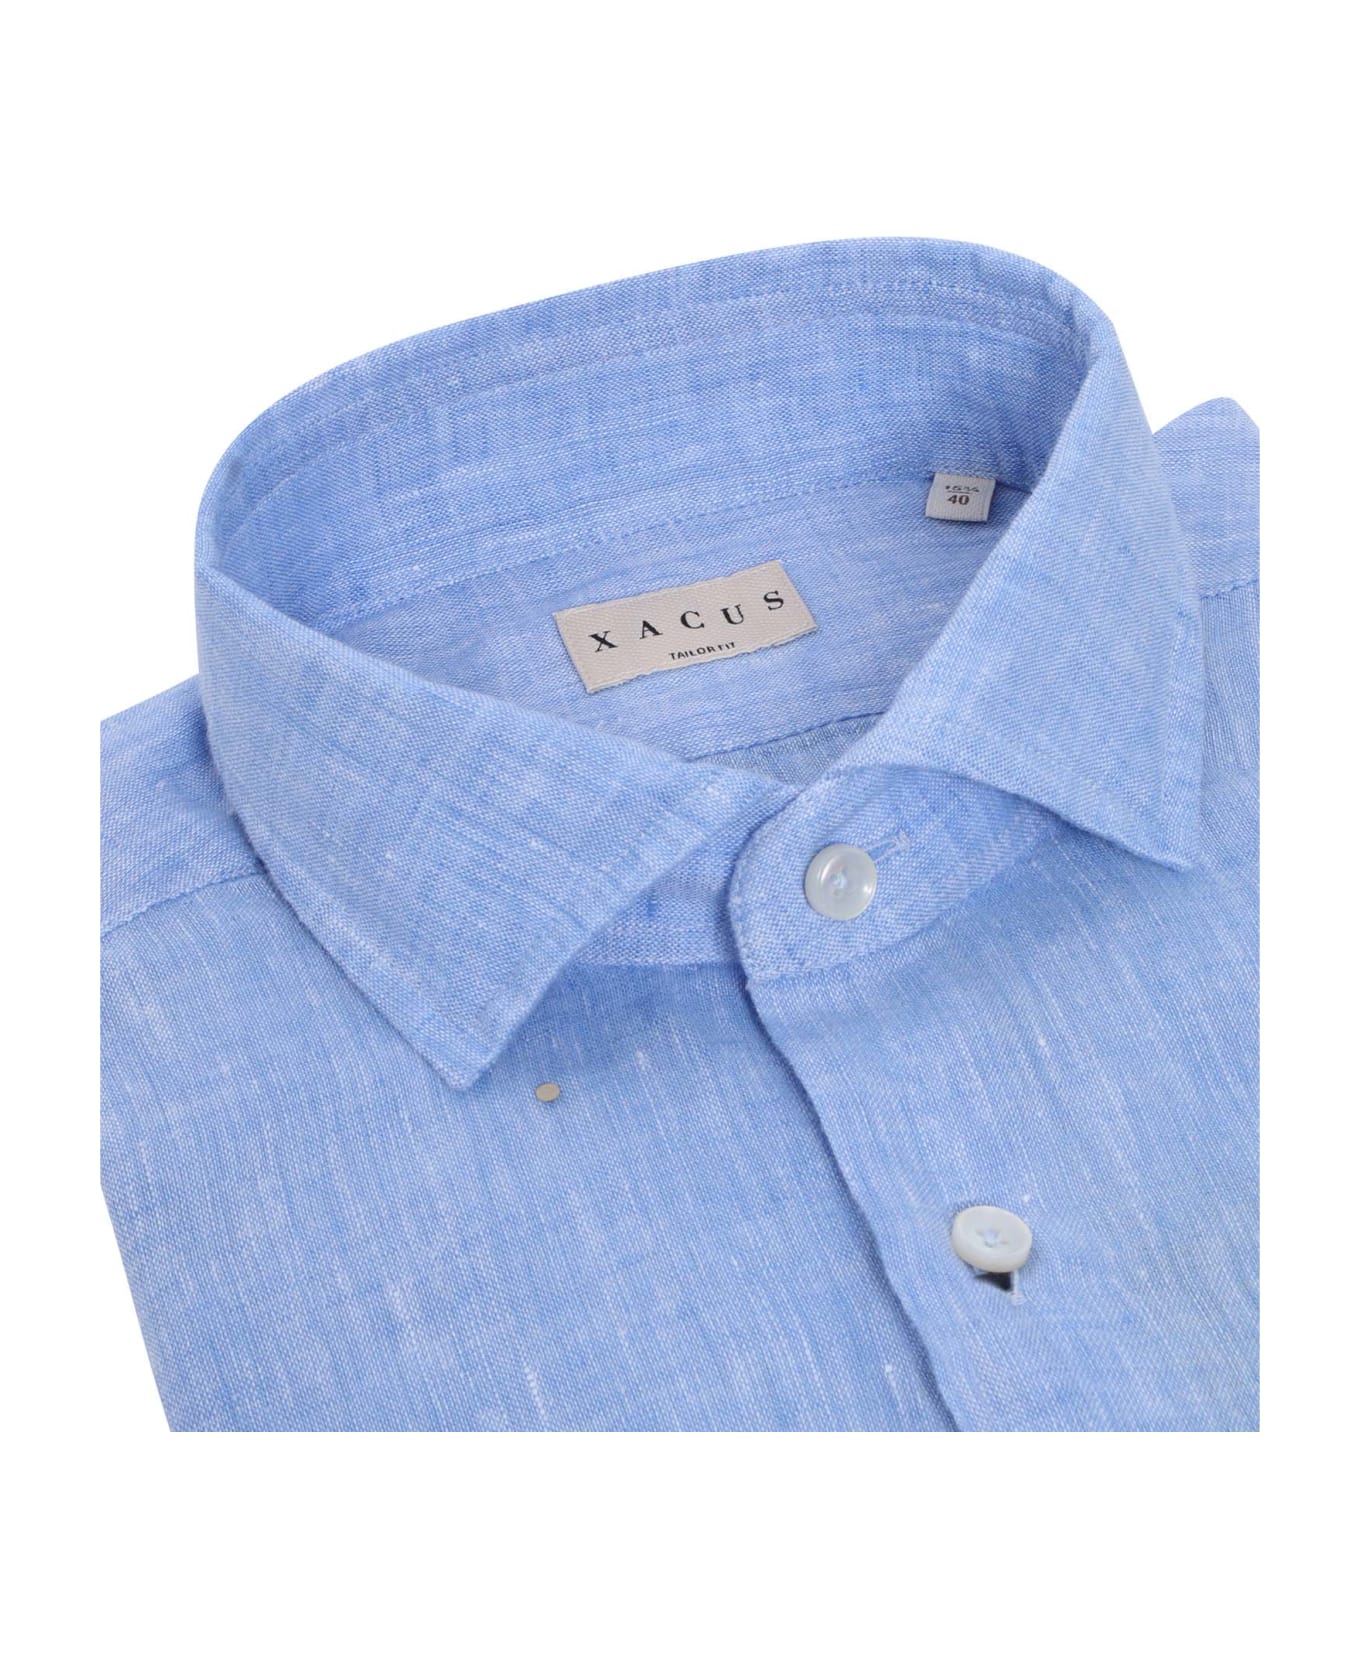 Xacus Light Blue Linen Shirt - MULTICOLOR